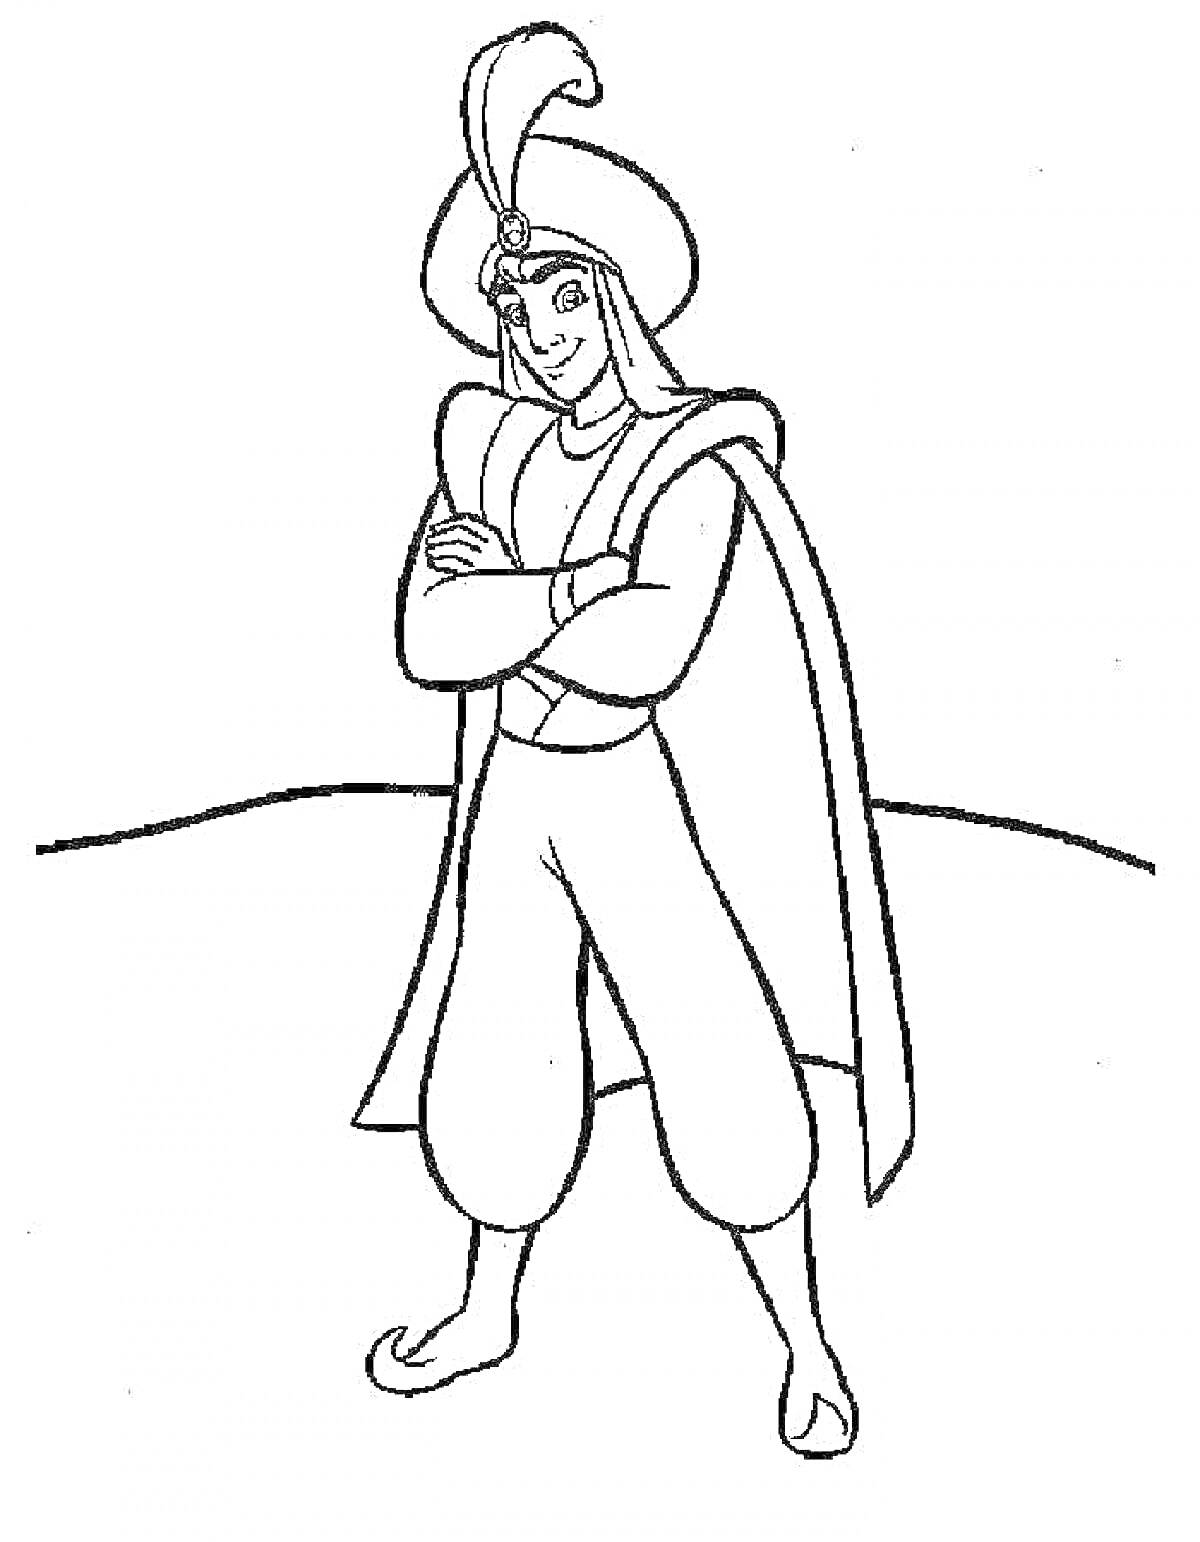 Раскраска Алладин в тюрбане с пером, скрестивший руки на груди, на фоне линии горизонта